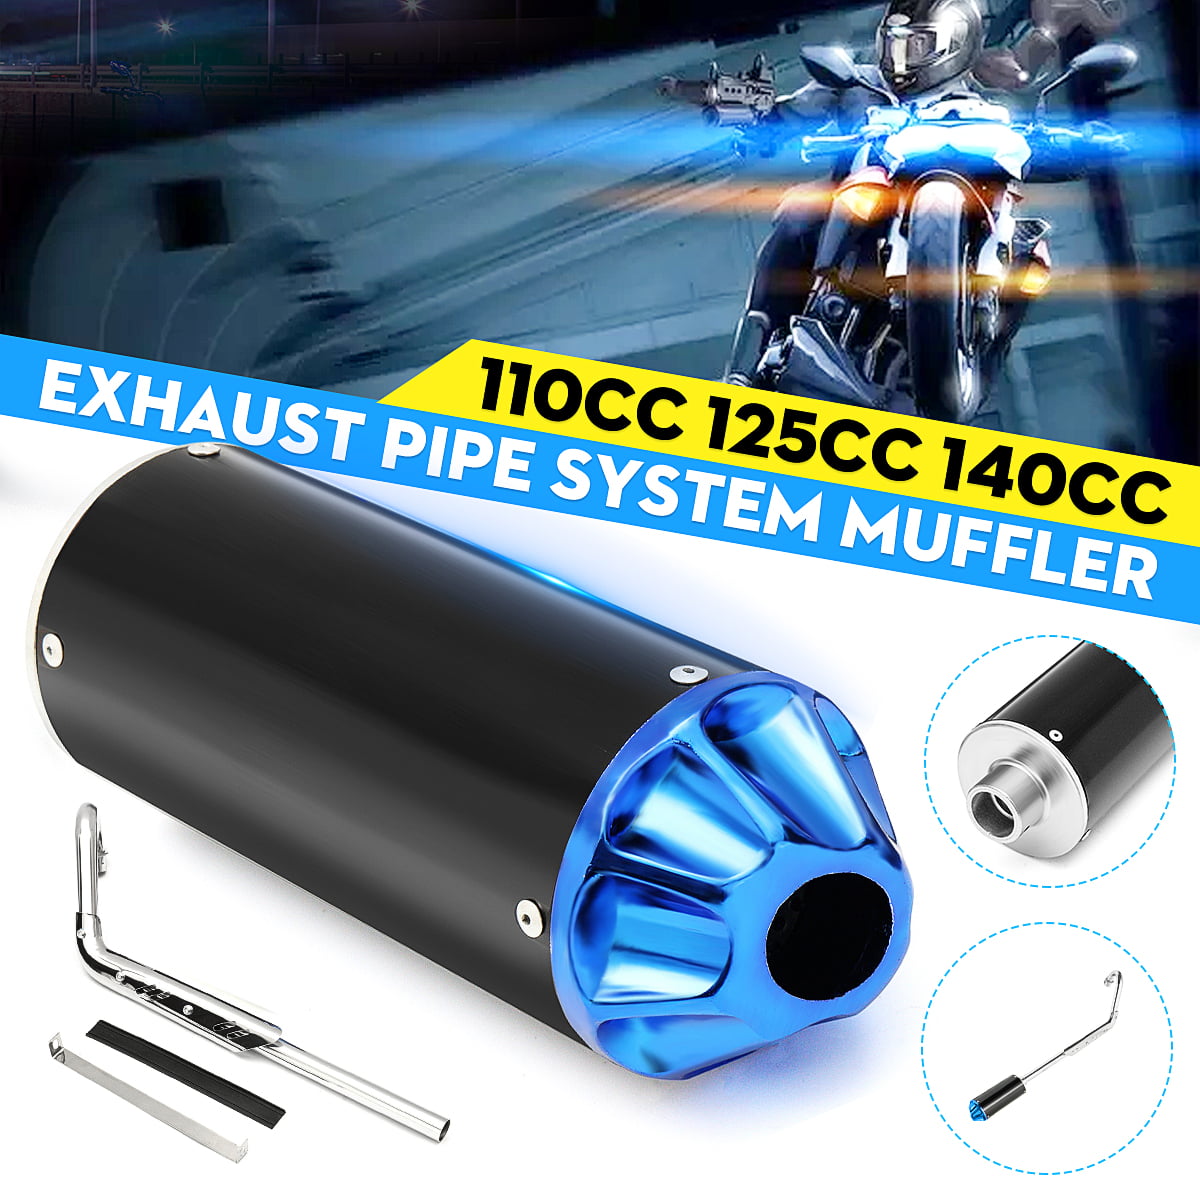 Pit Dirtbike Blue Performance CNC Exhaust Pipe System Muffler 110cc 125cc 140cc